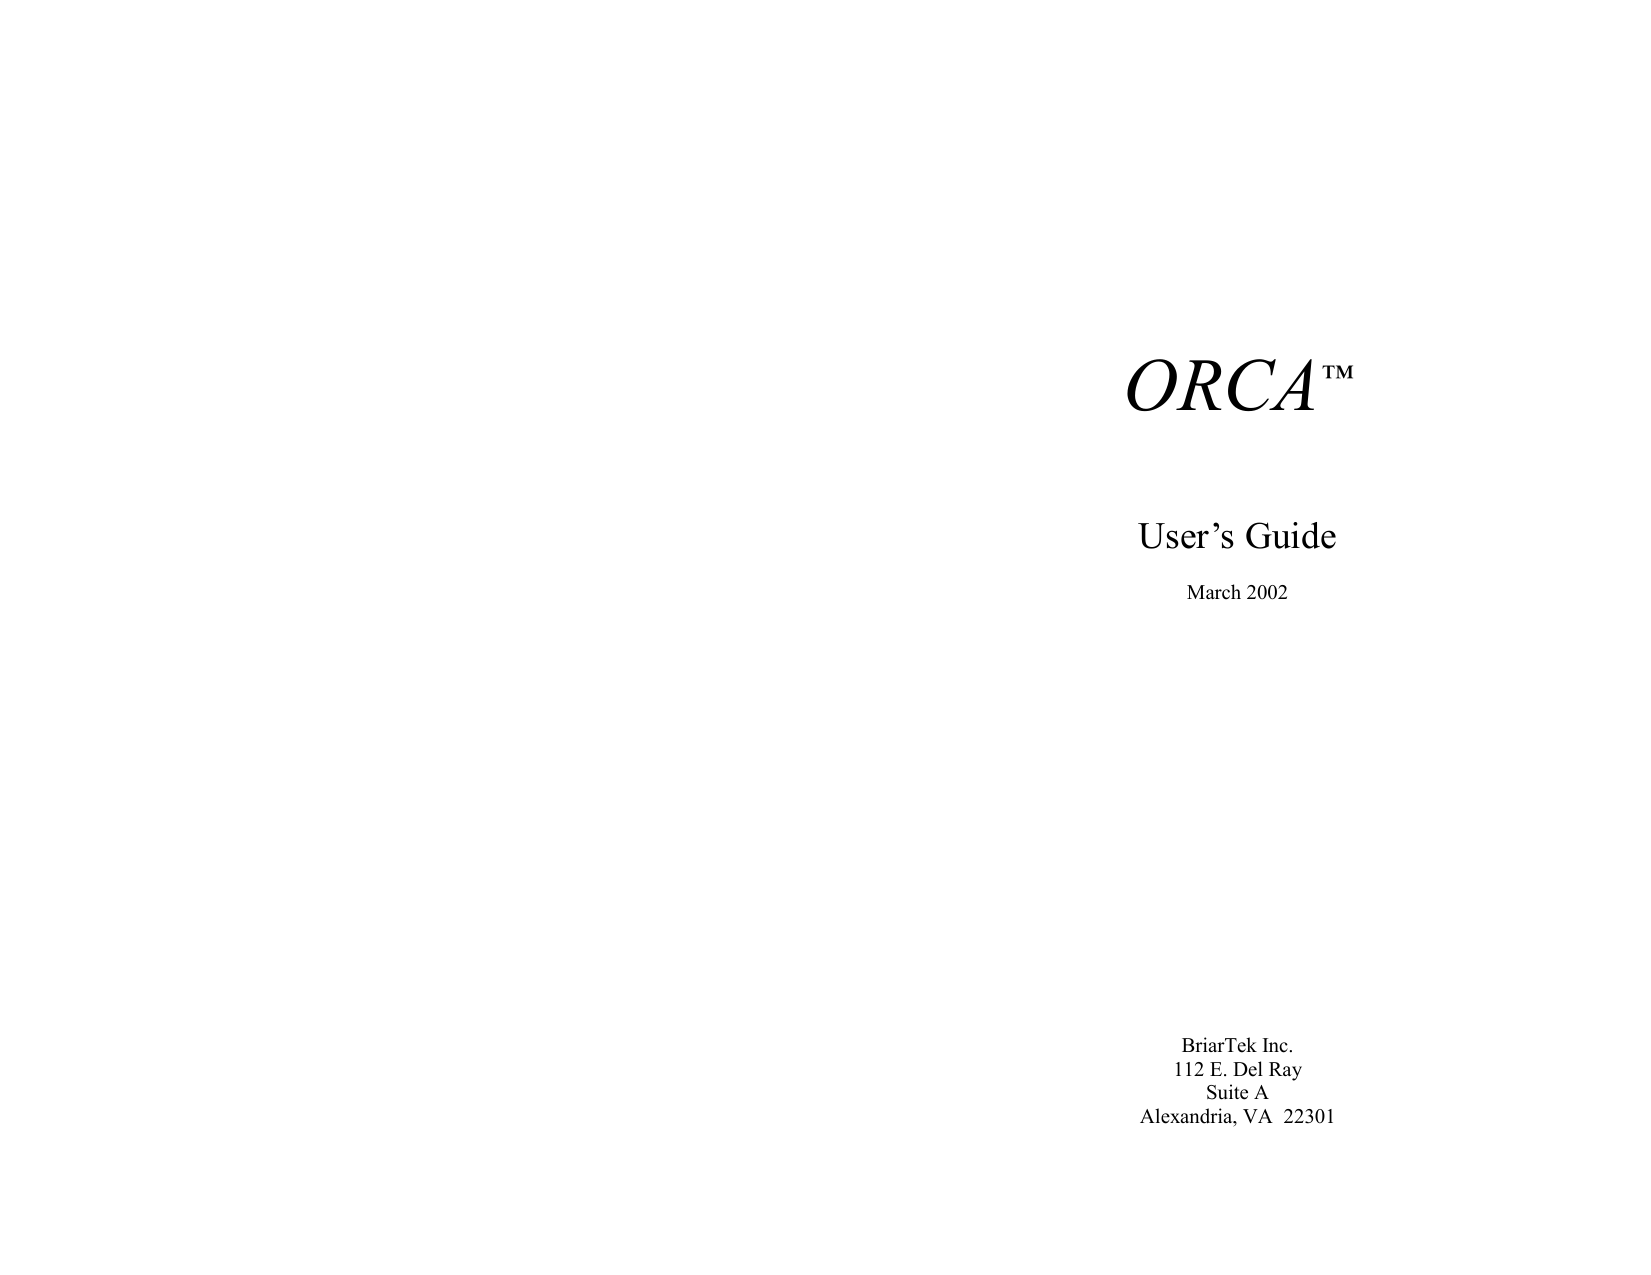      ORCA™  User’s Guide  March 2002                   BriarTek Inc. 112 E. Del Ray Suite A Alexandria, VA  22301  